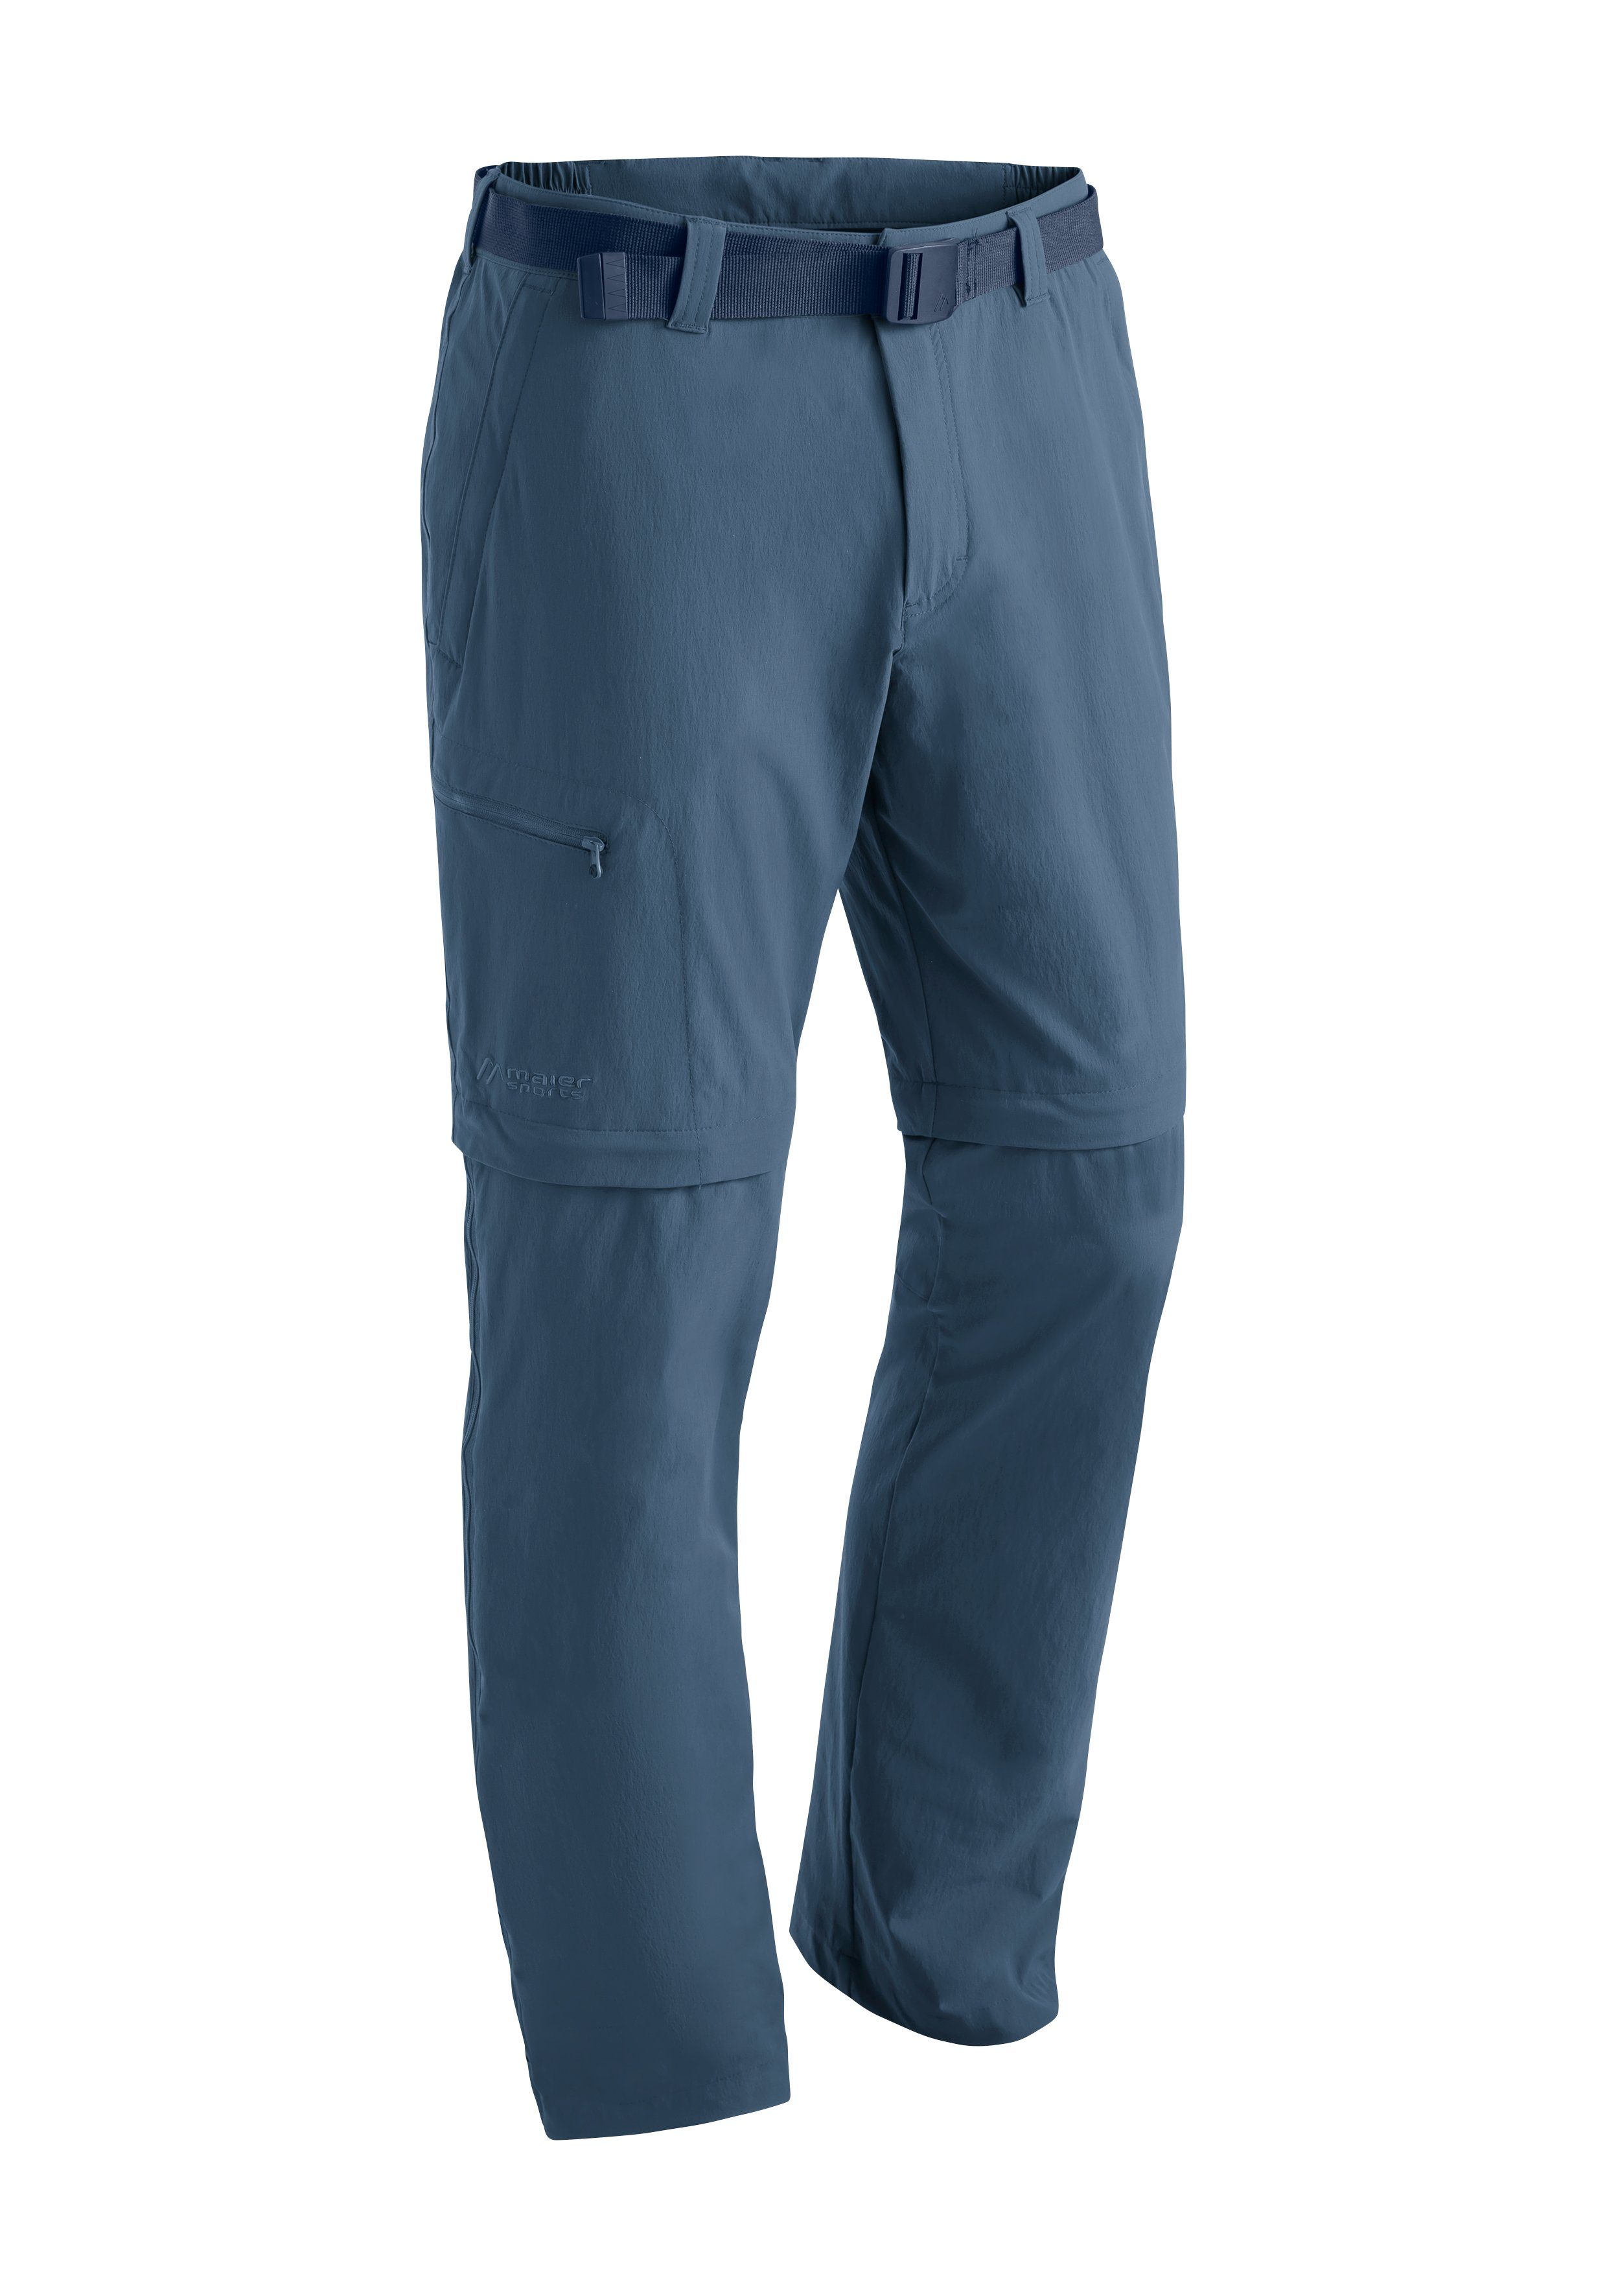 Herren Funktionshose zipp-off Tajo Maier atmungsaktive Outdoor-Hose jeansblau Wanderhose, Sports